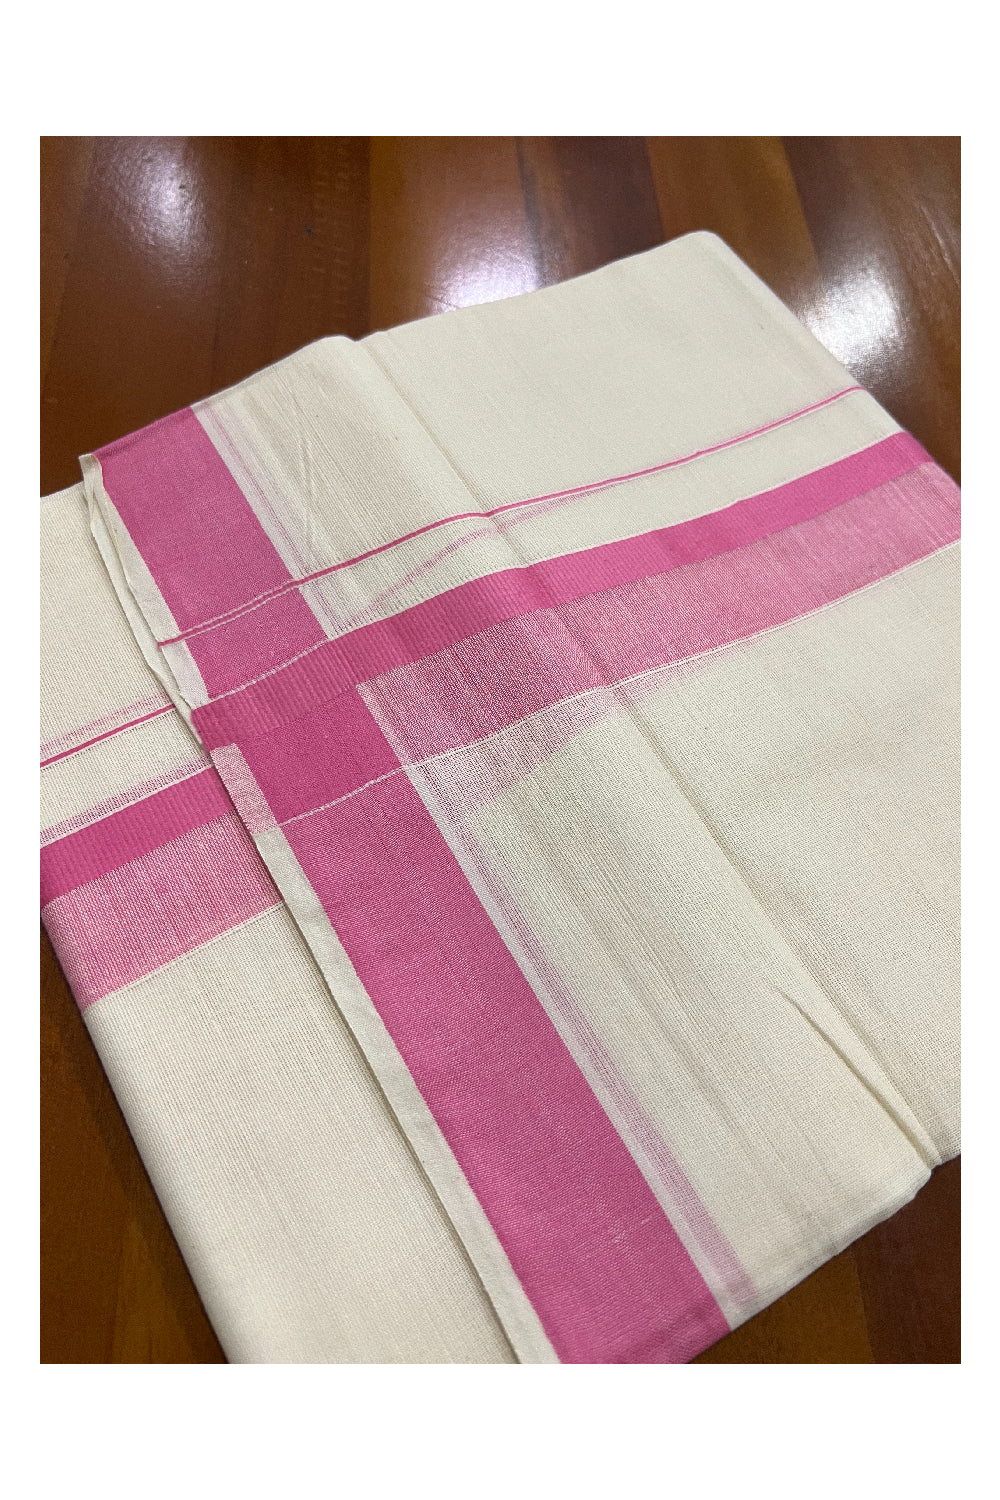 Off White Kerala Double Mundu with Pink Shaded Kara (South Indian Dhoti)